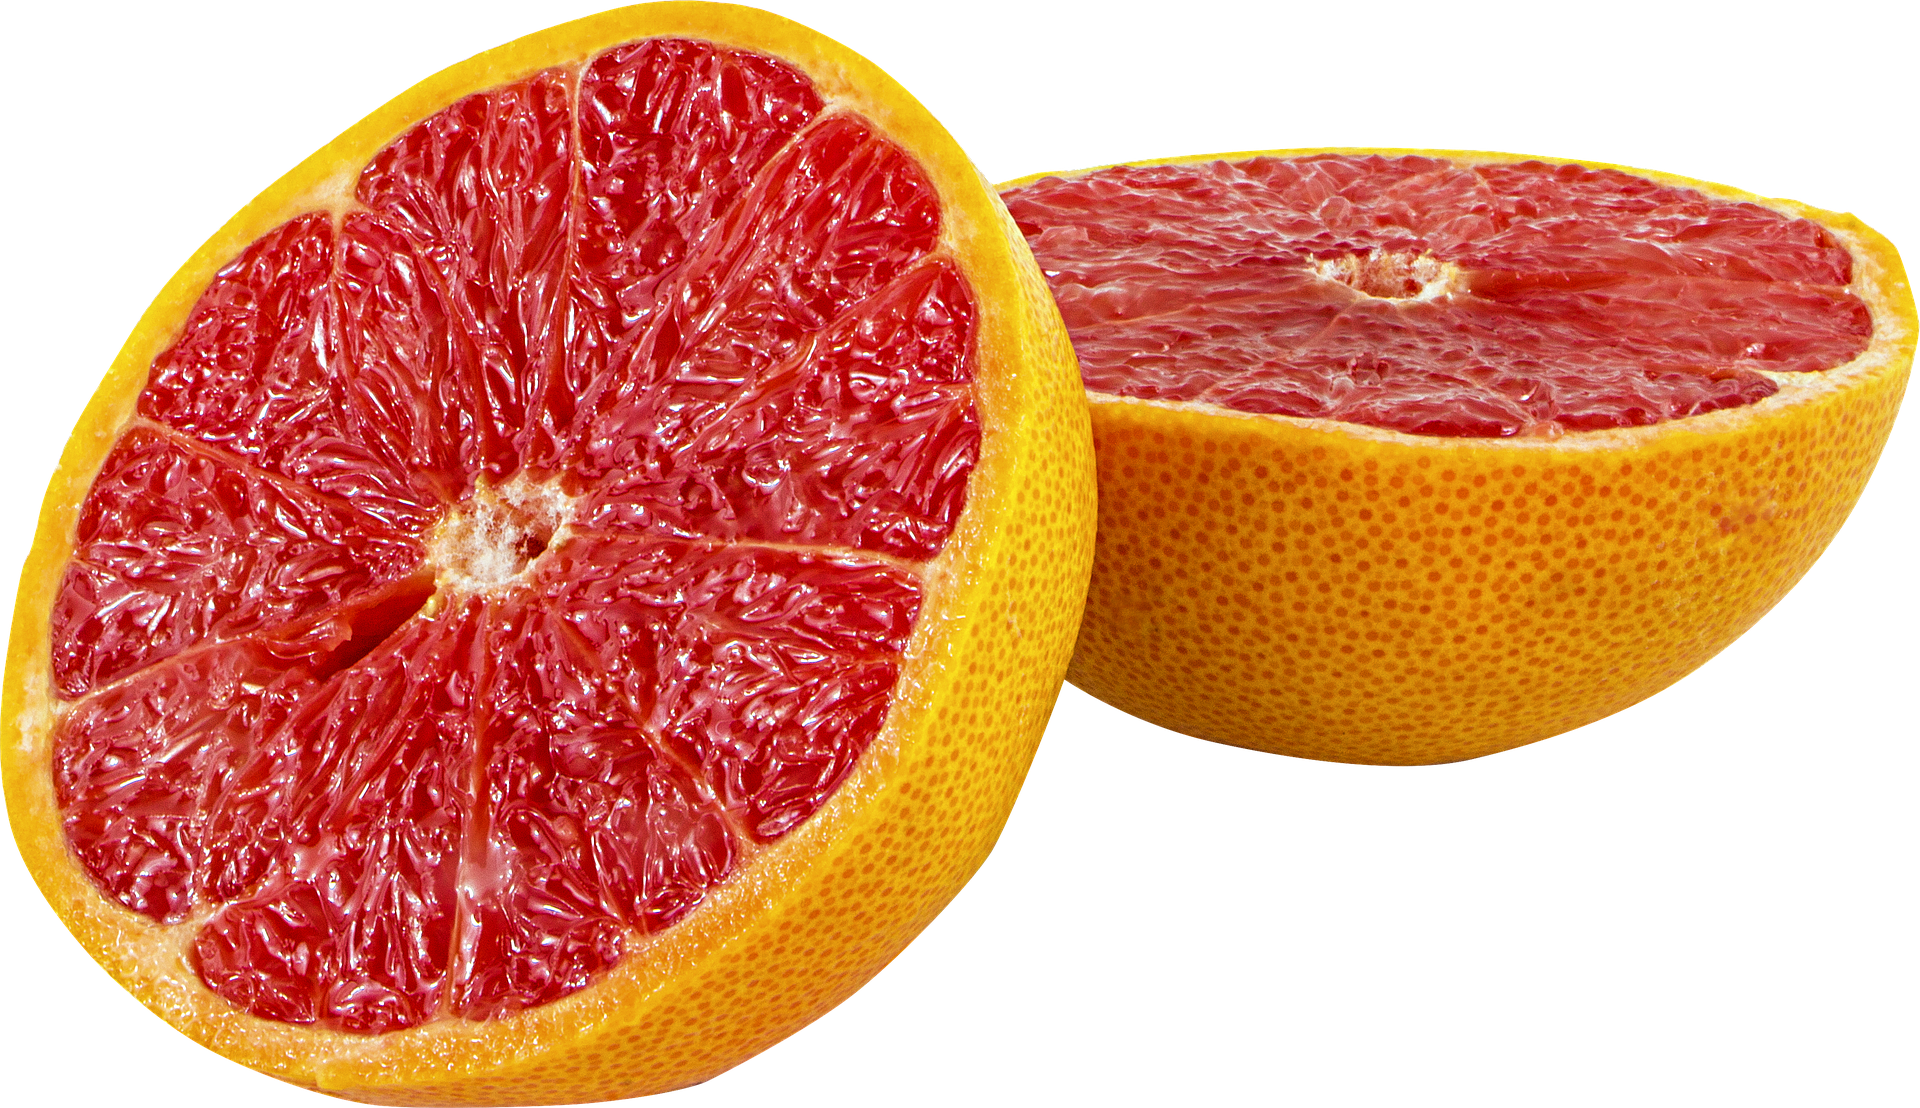 grapefruit%20pro%20v%C5%AFni%20do%20vodn%C3%ADho%20vysava%C4%8De